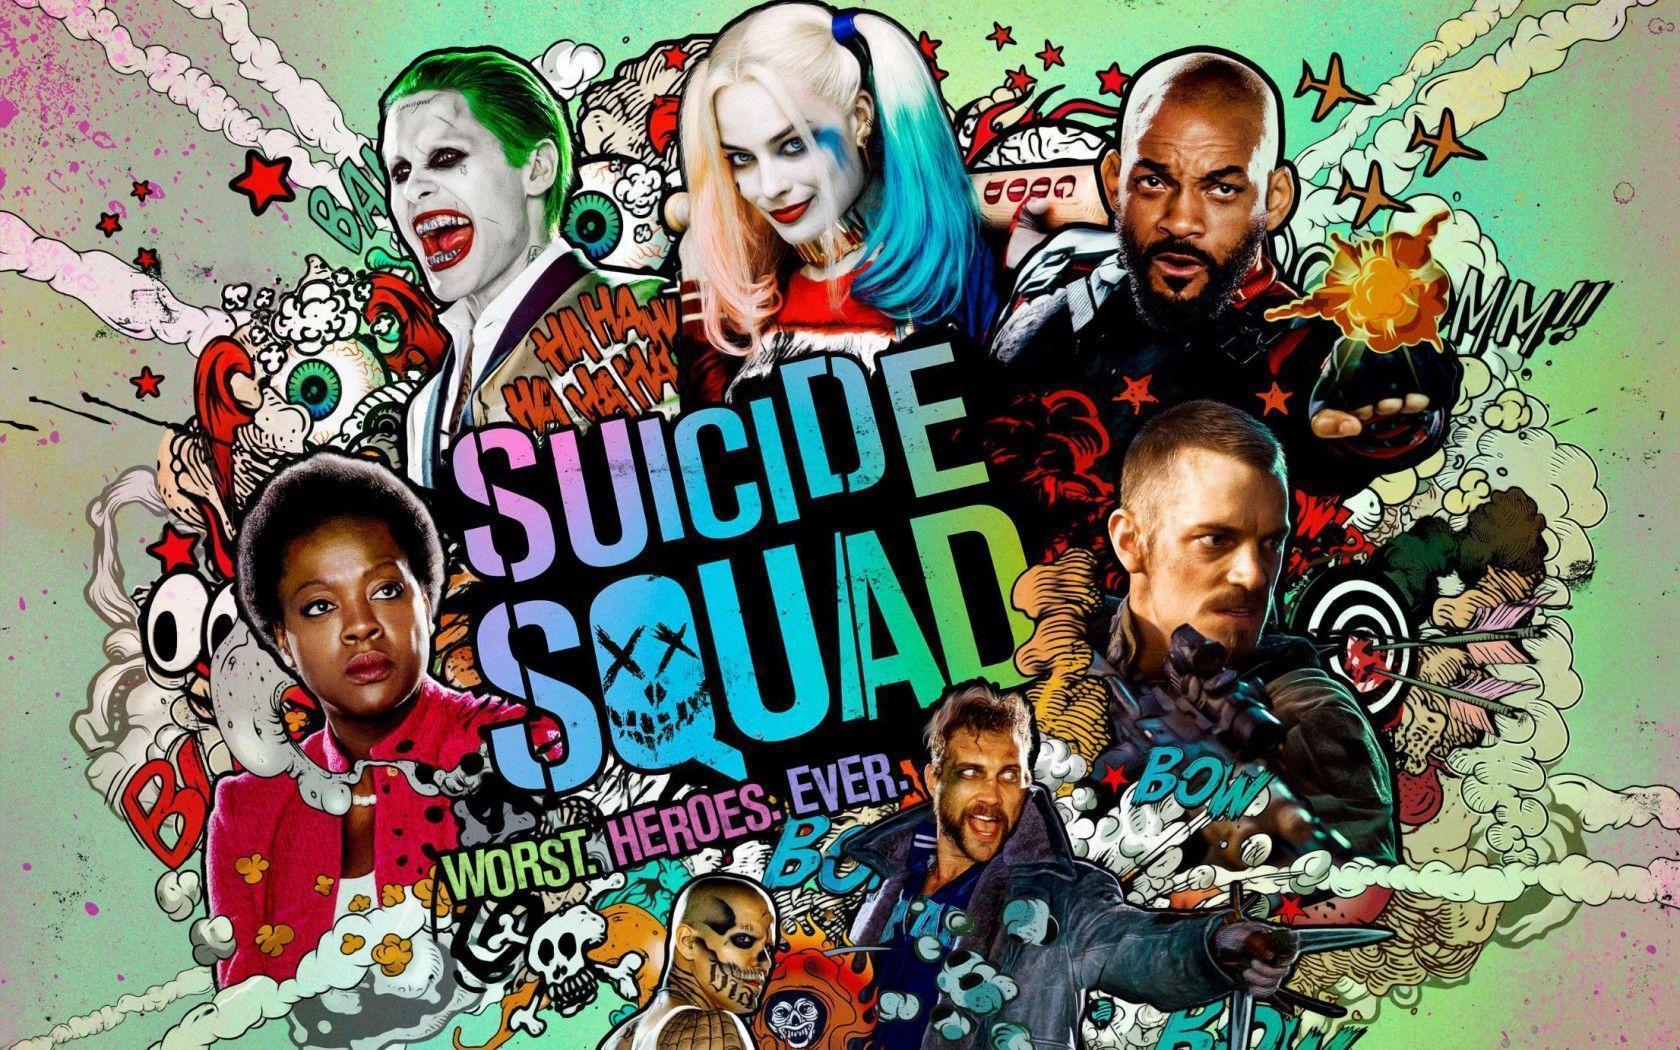 Wallpapers Suicide squad, Harley quinn, Deadshot, Joker, Captain